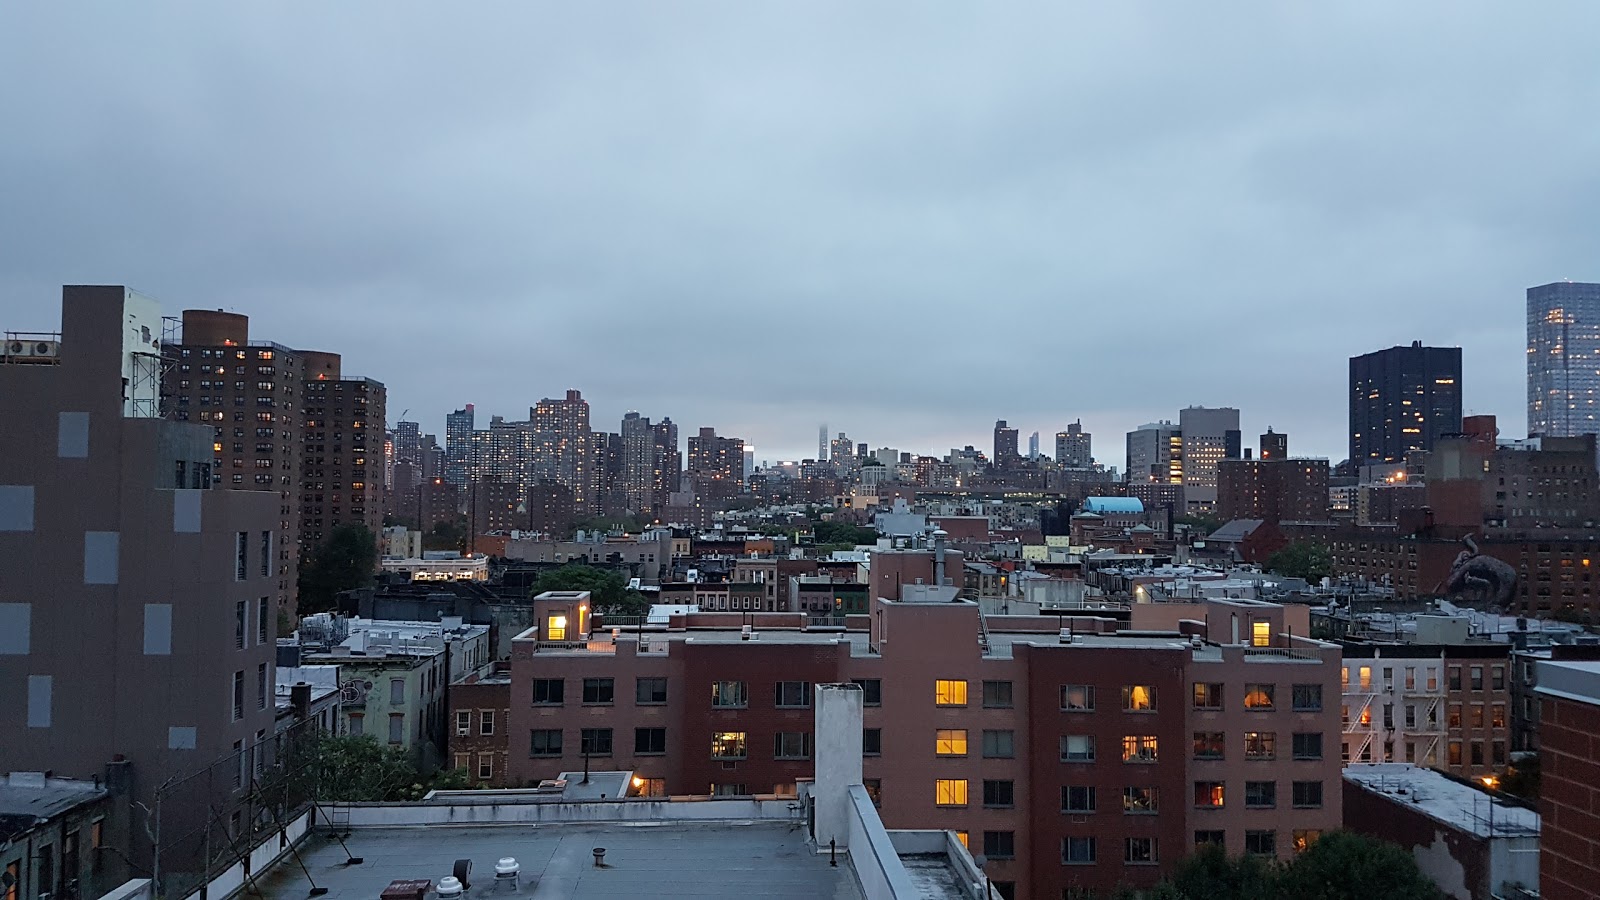 Photo of Mirada Condominium in New York City, New York, United States - 1 Picture of Point of interest, Establishment